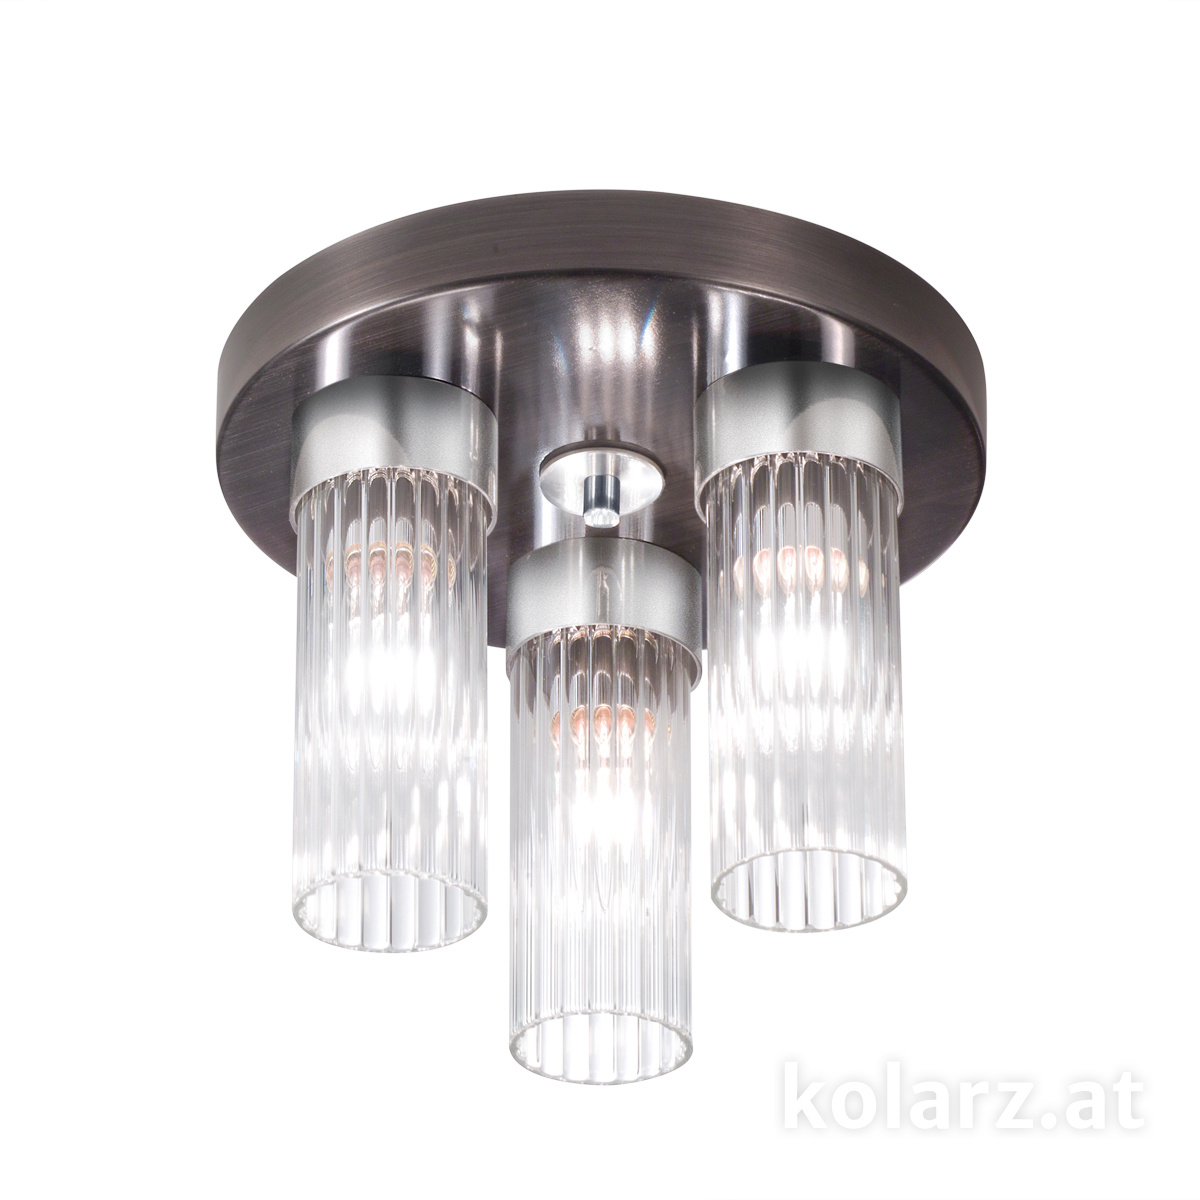 KOLARZ Leuchten Sonderangebote - Sale bei Deckenleuchten & Deckenlampen von KOLARZ Leuchten Deckenleuchte GIRO 6010.10360